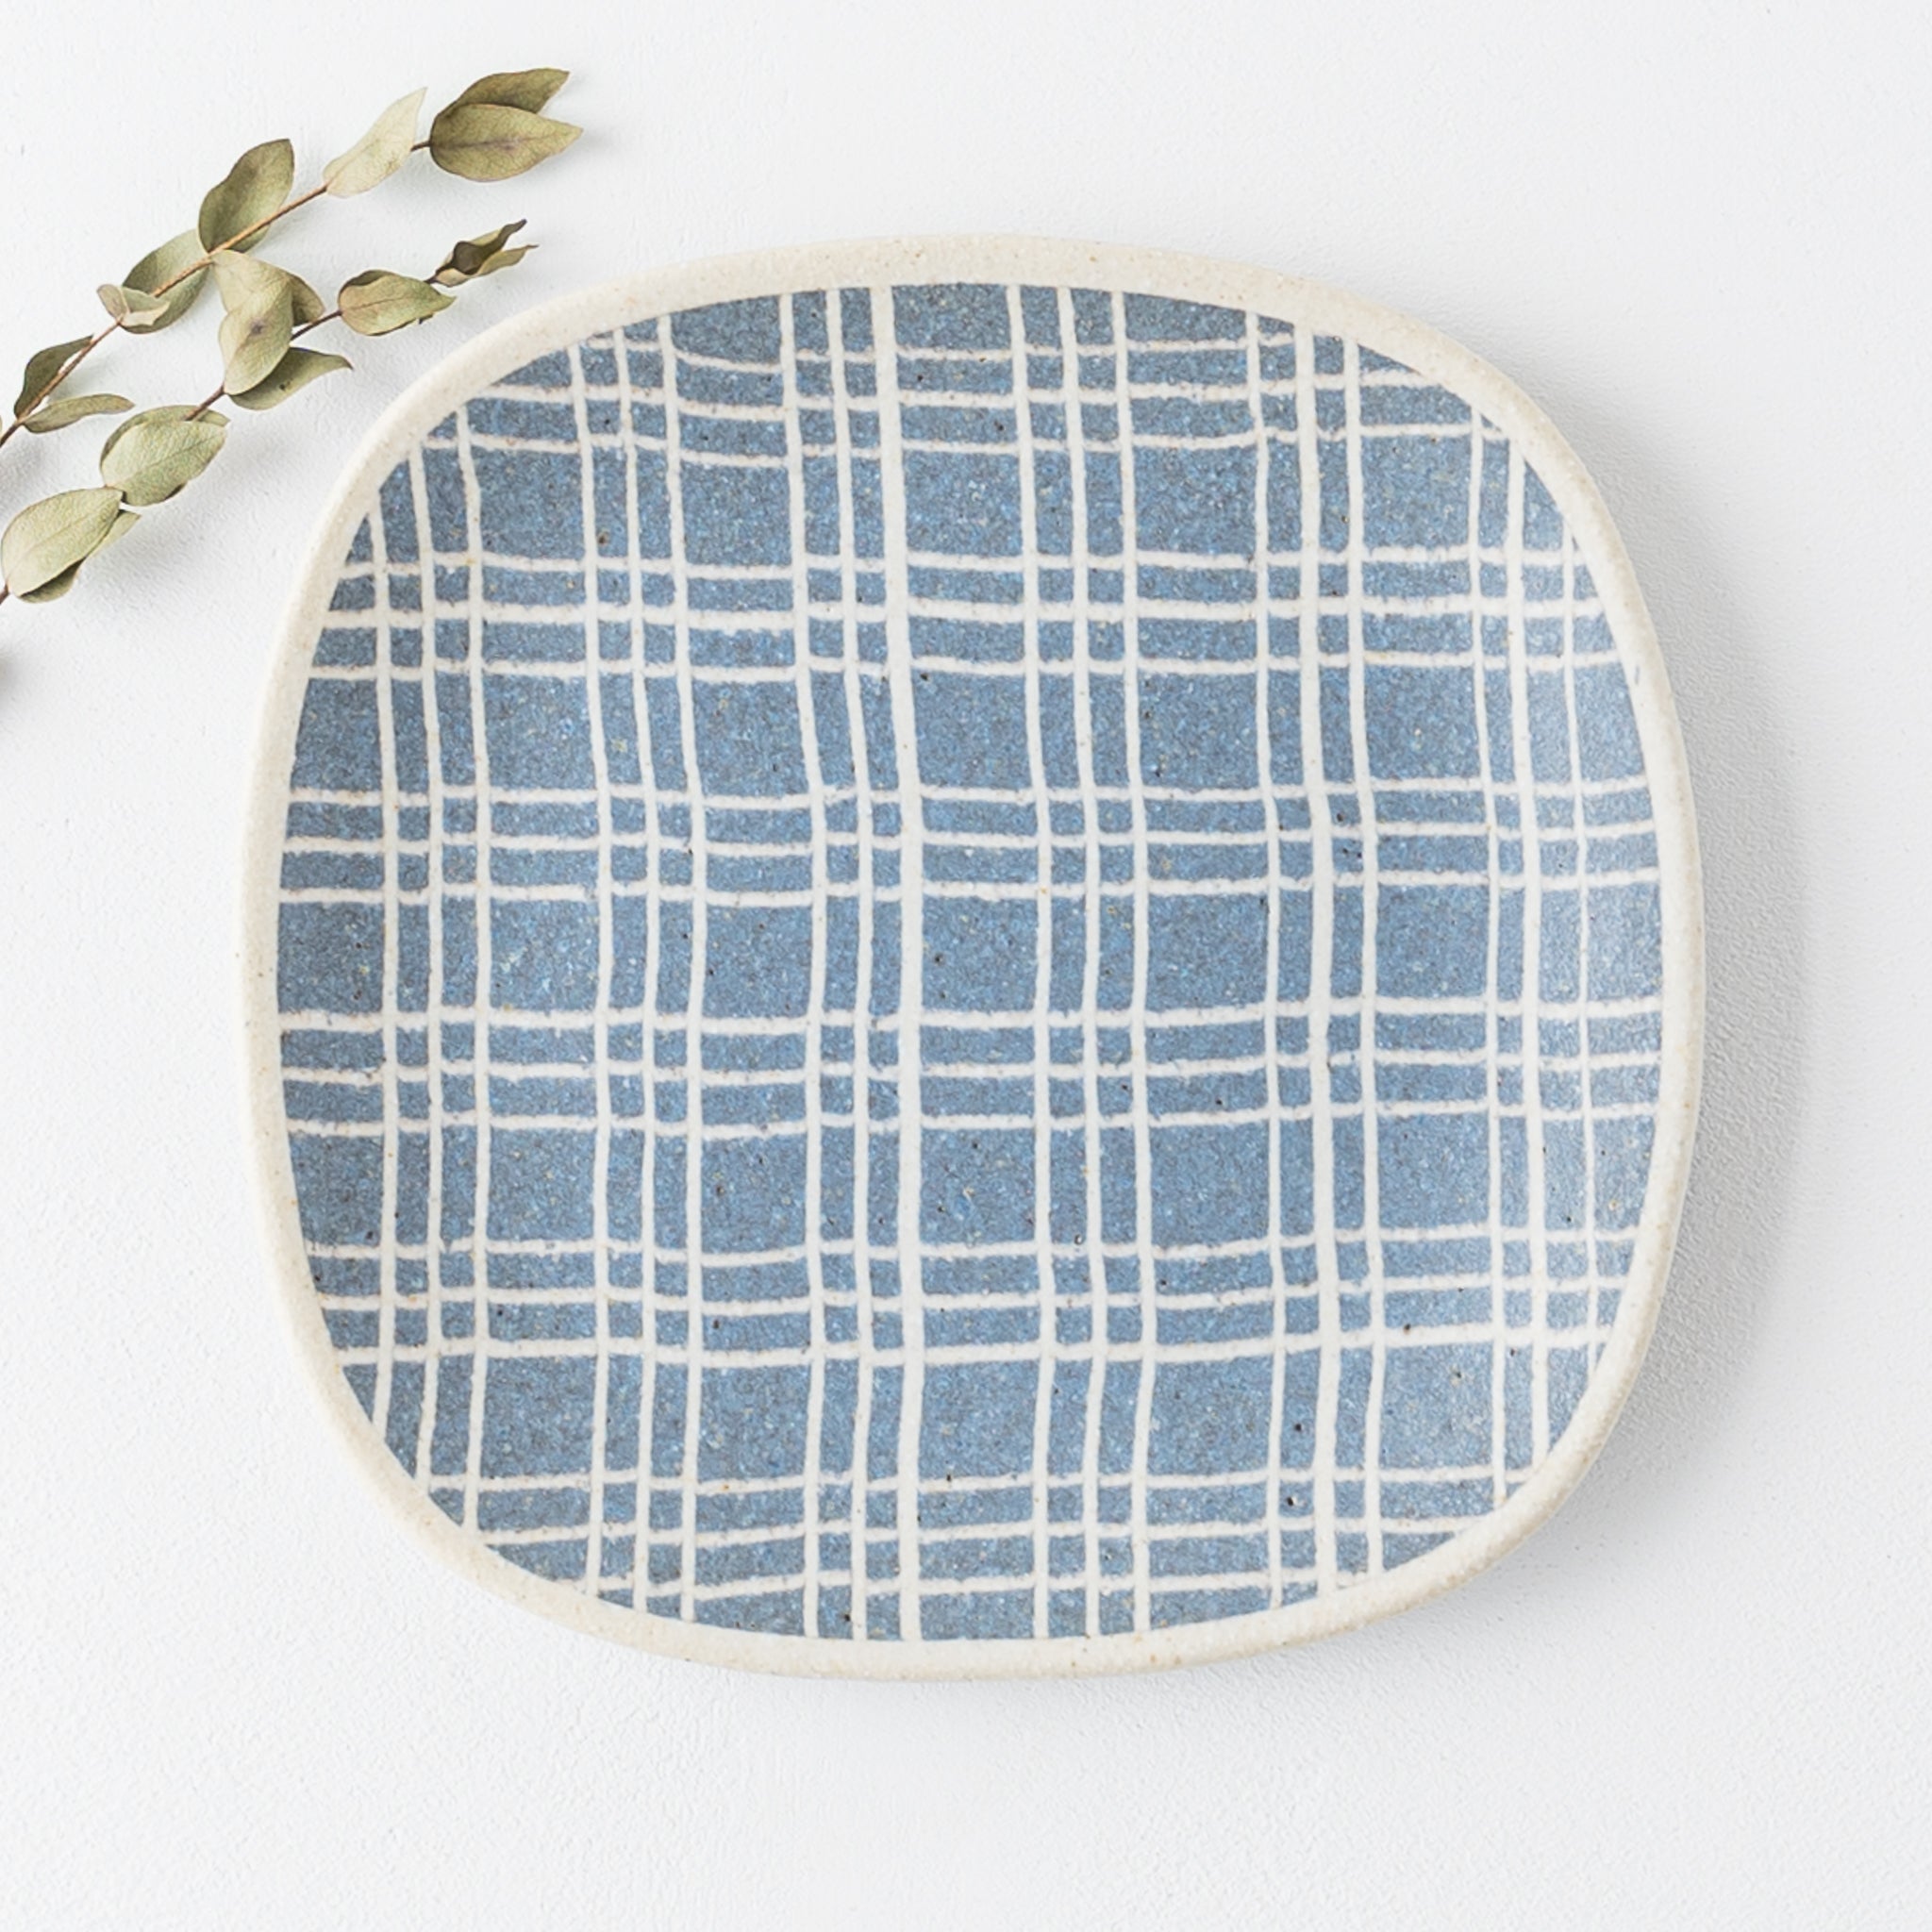 Hanako Sakashita's bread plate with cute lattice pattern